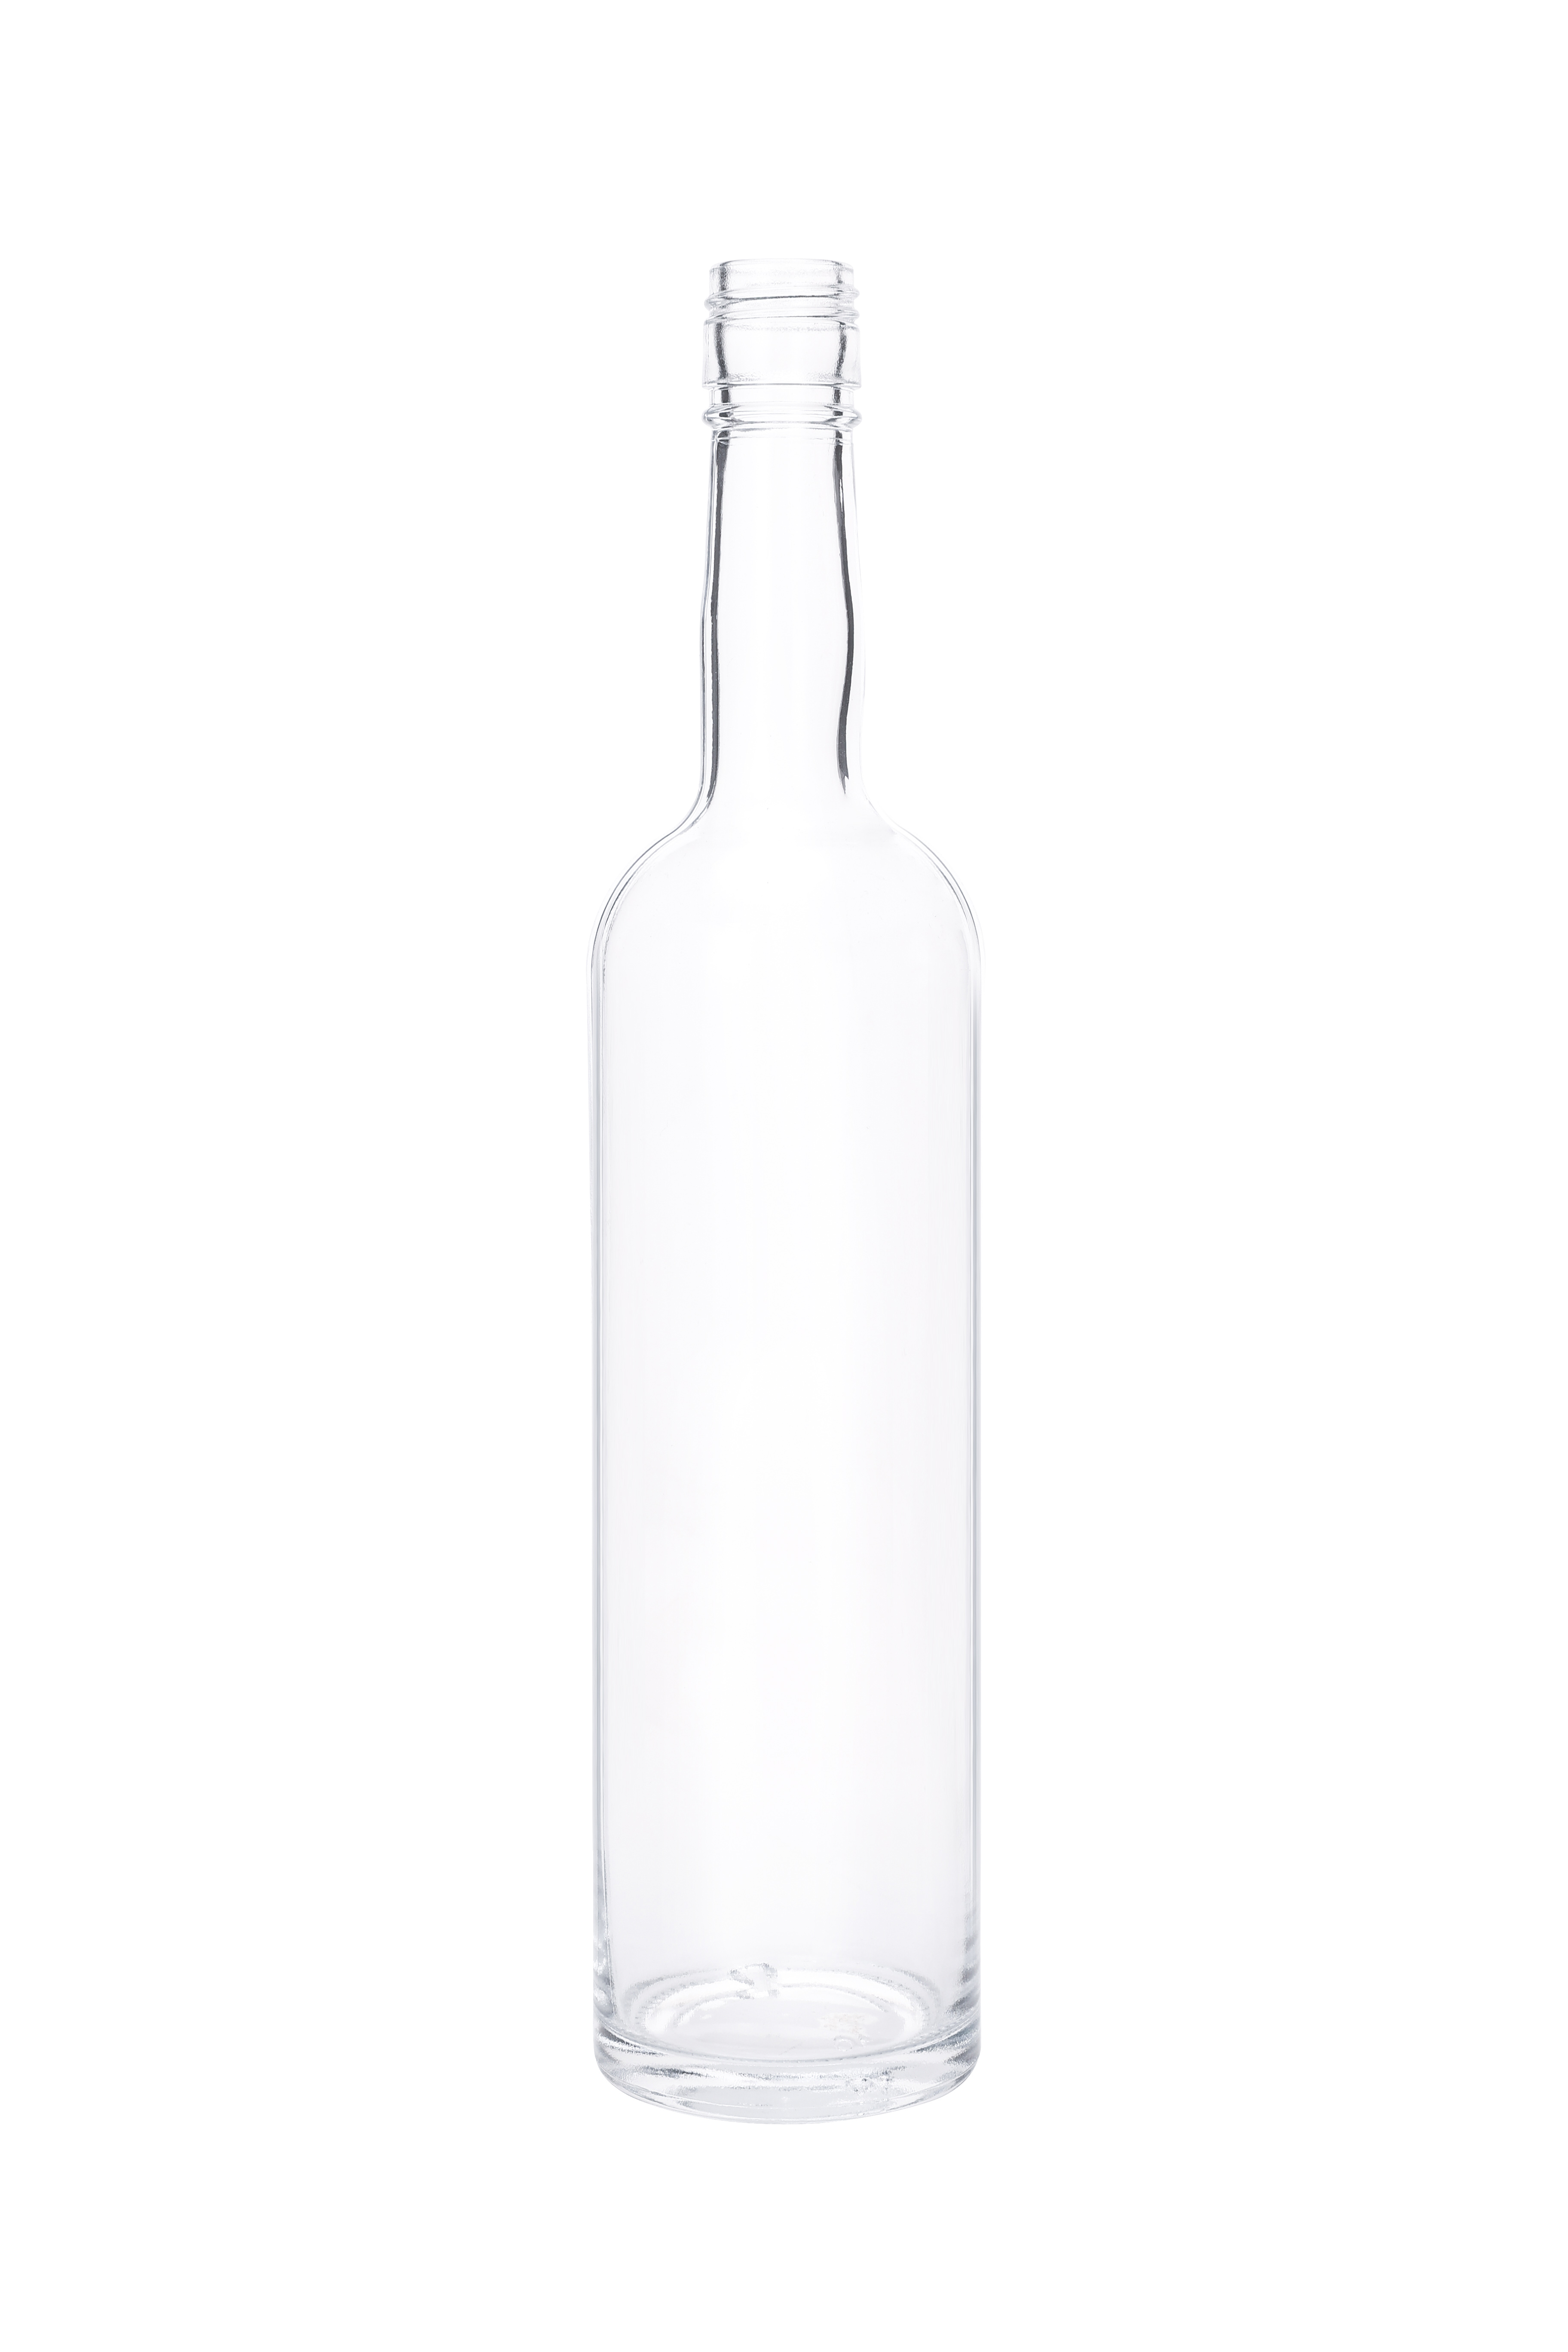 Wholesale Factory Custom Empty Glass Liquor Bottle Vodka Gin Glass Bottle with Cork 